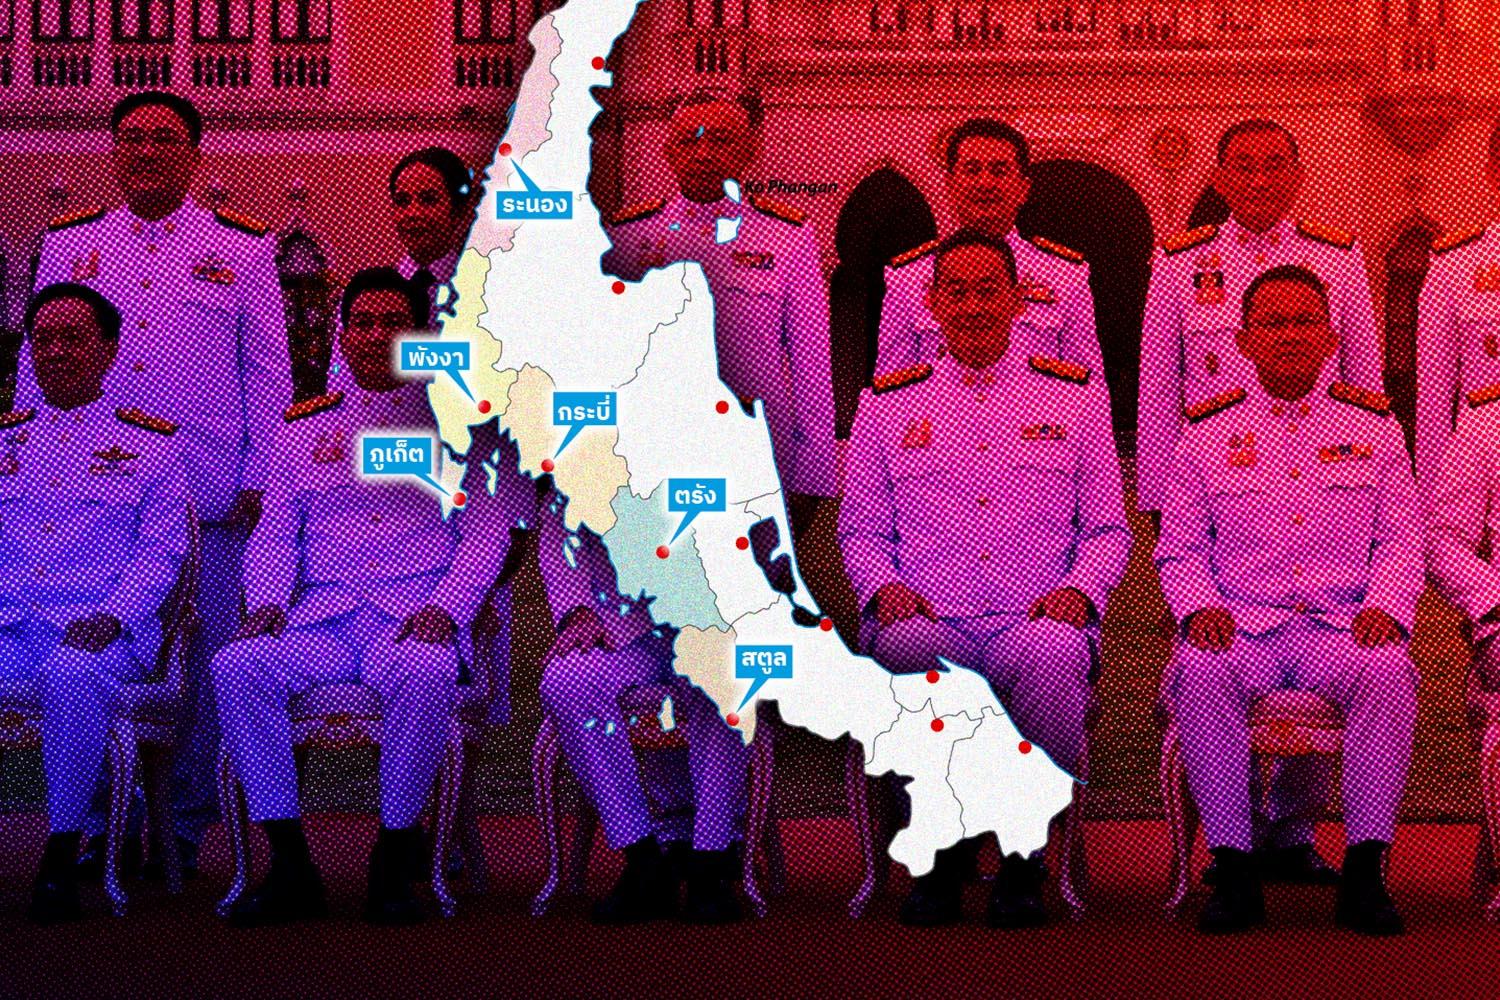 cabinet-traveling-ranong-6-provinces-andaman-20-projects-SPACEBAR-Hero.jpg